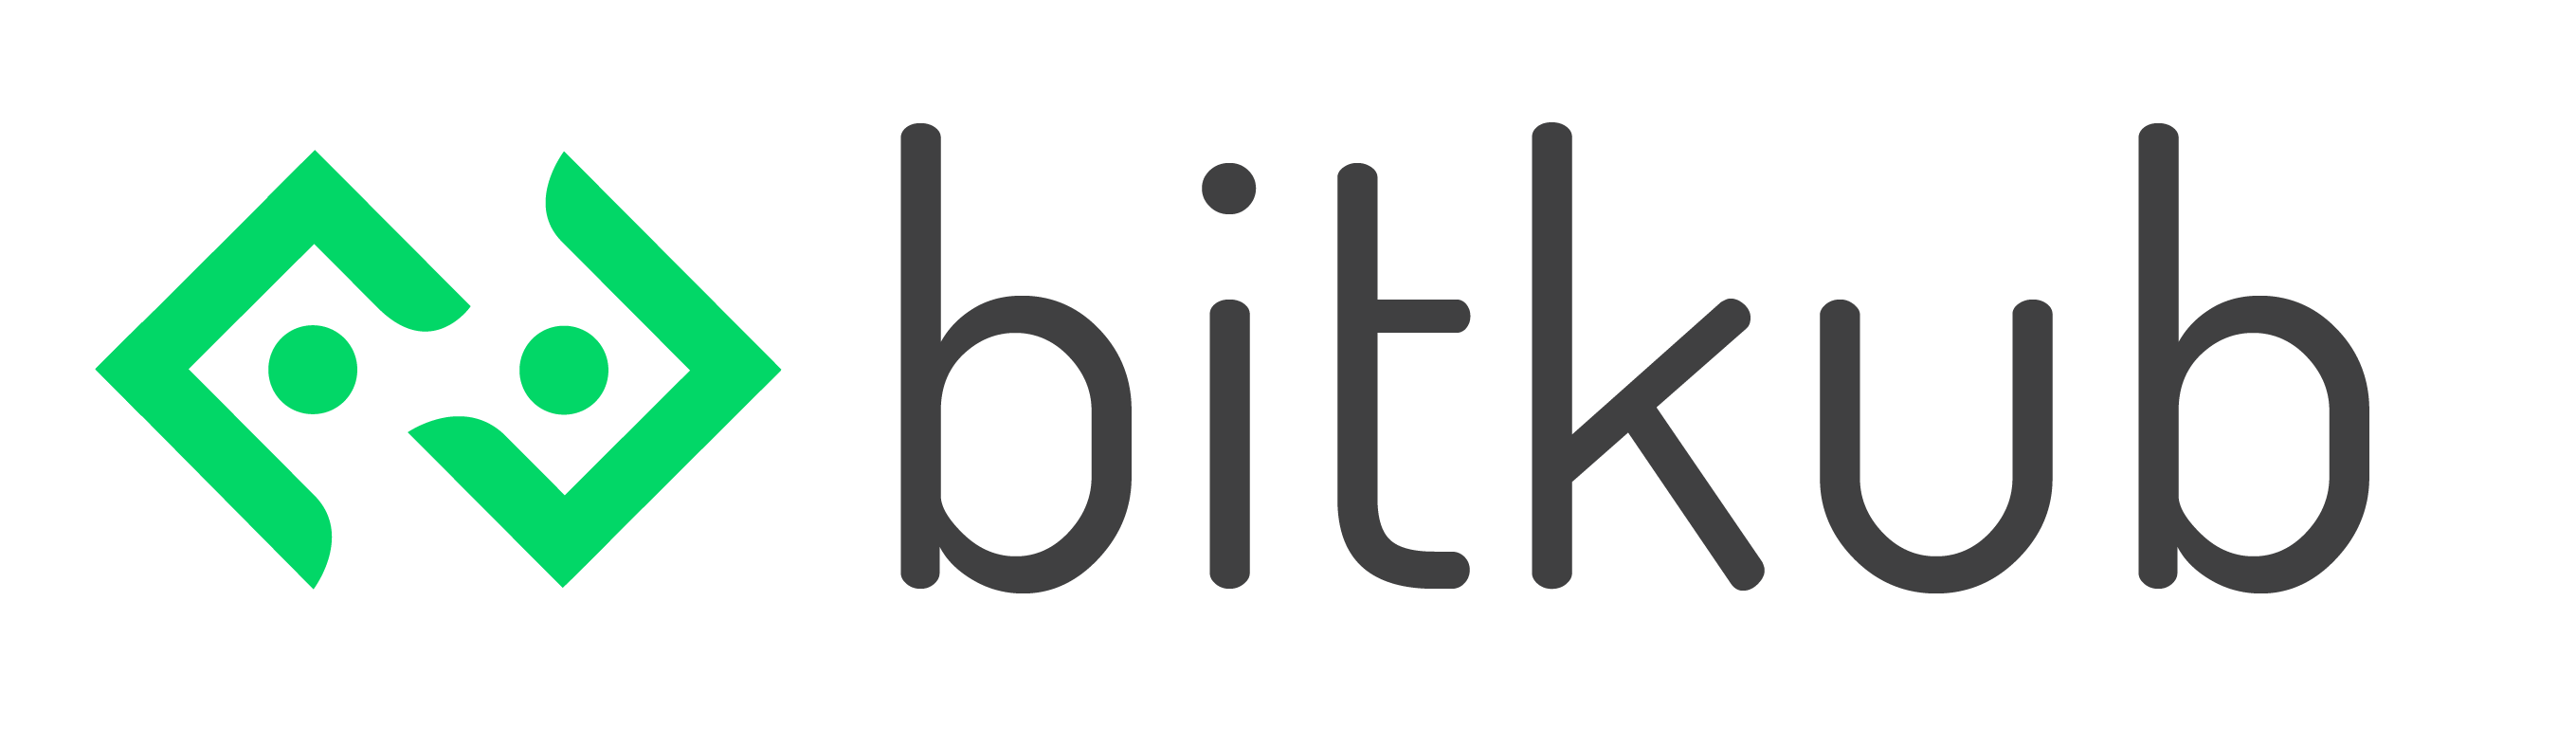 Bitkub-1.png